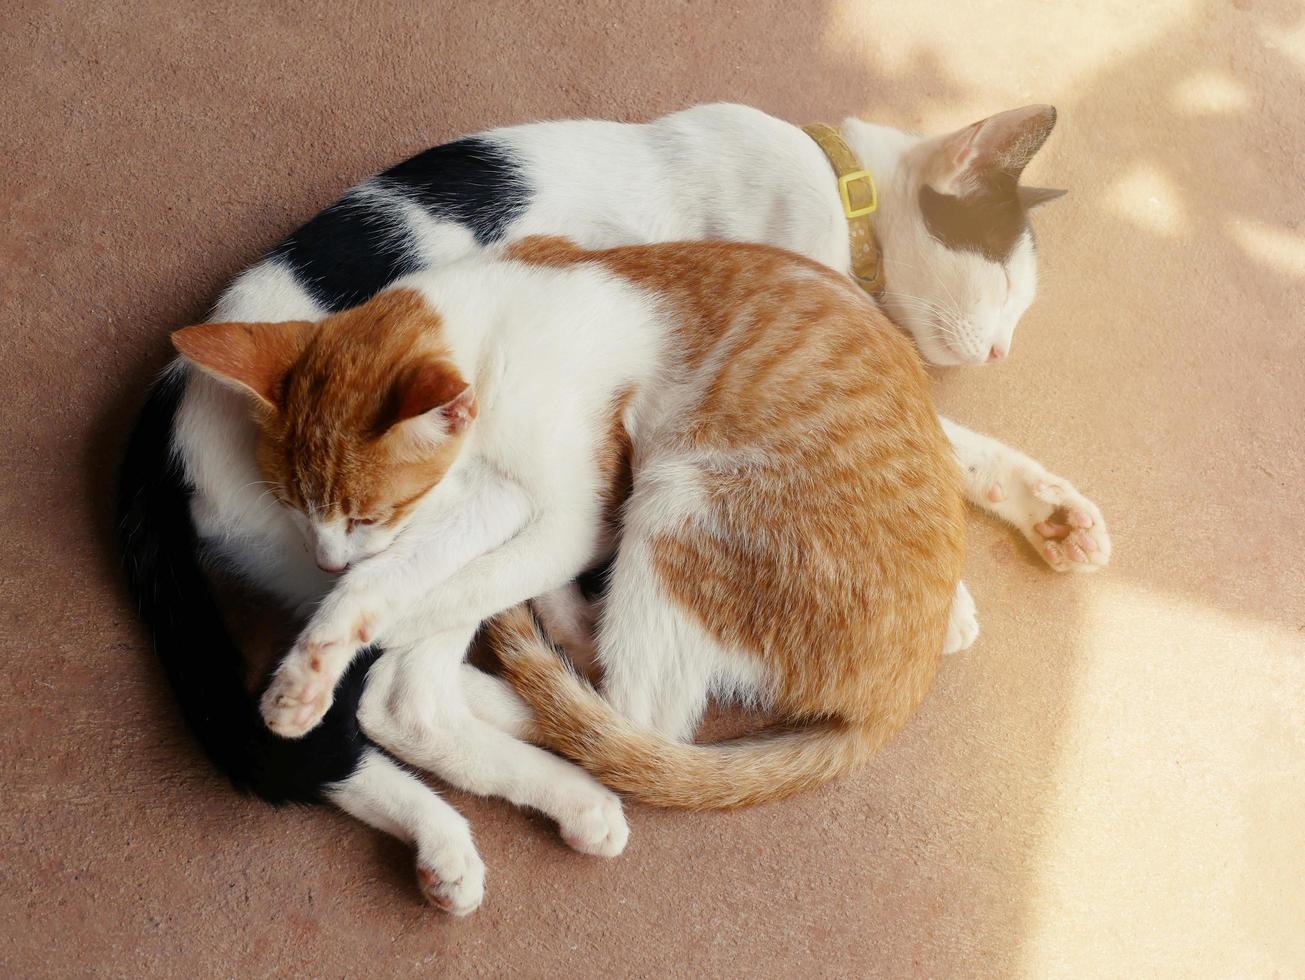 cute cats hug Shows warmth, intimacy, trust, cheerfulness. photo